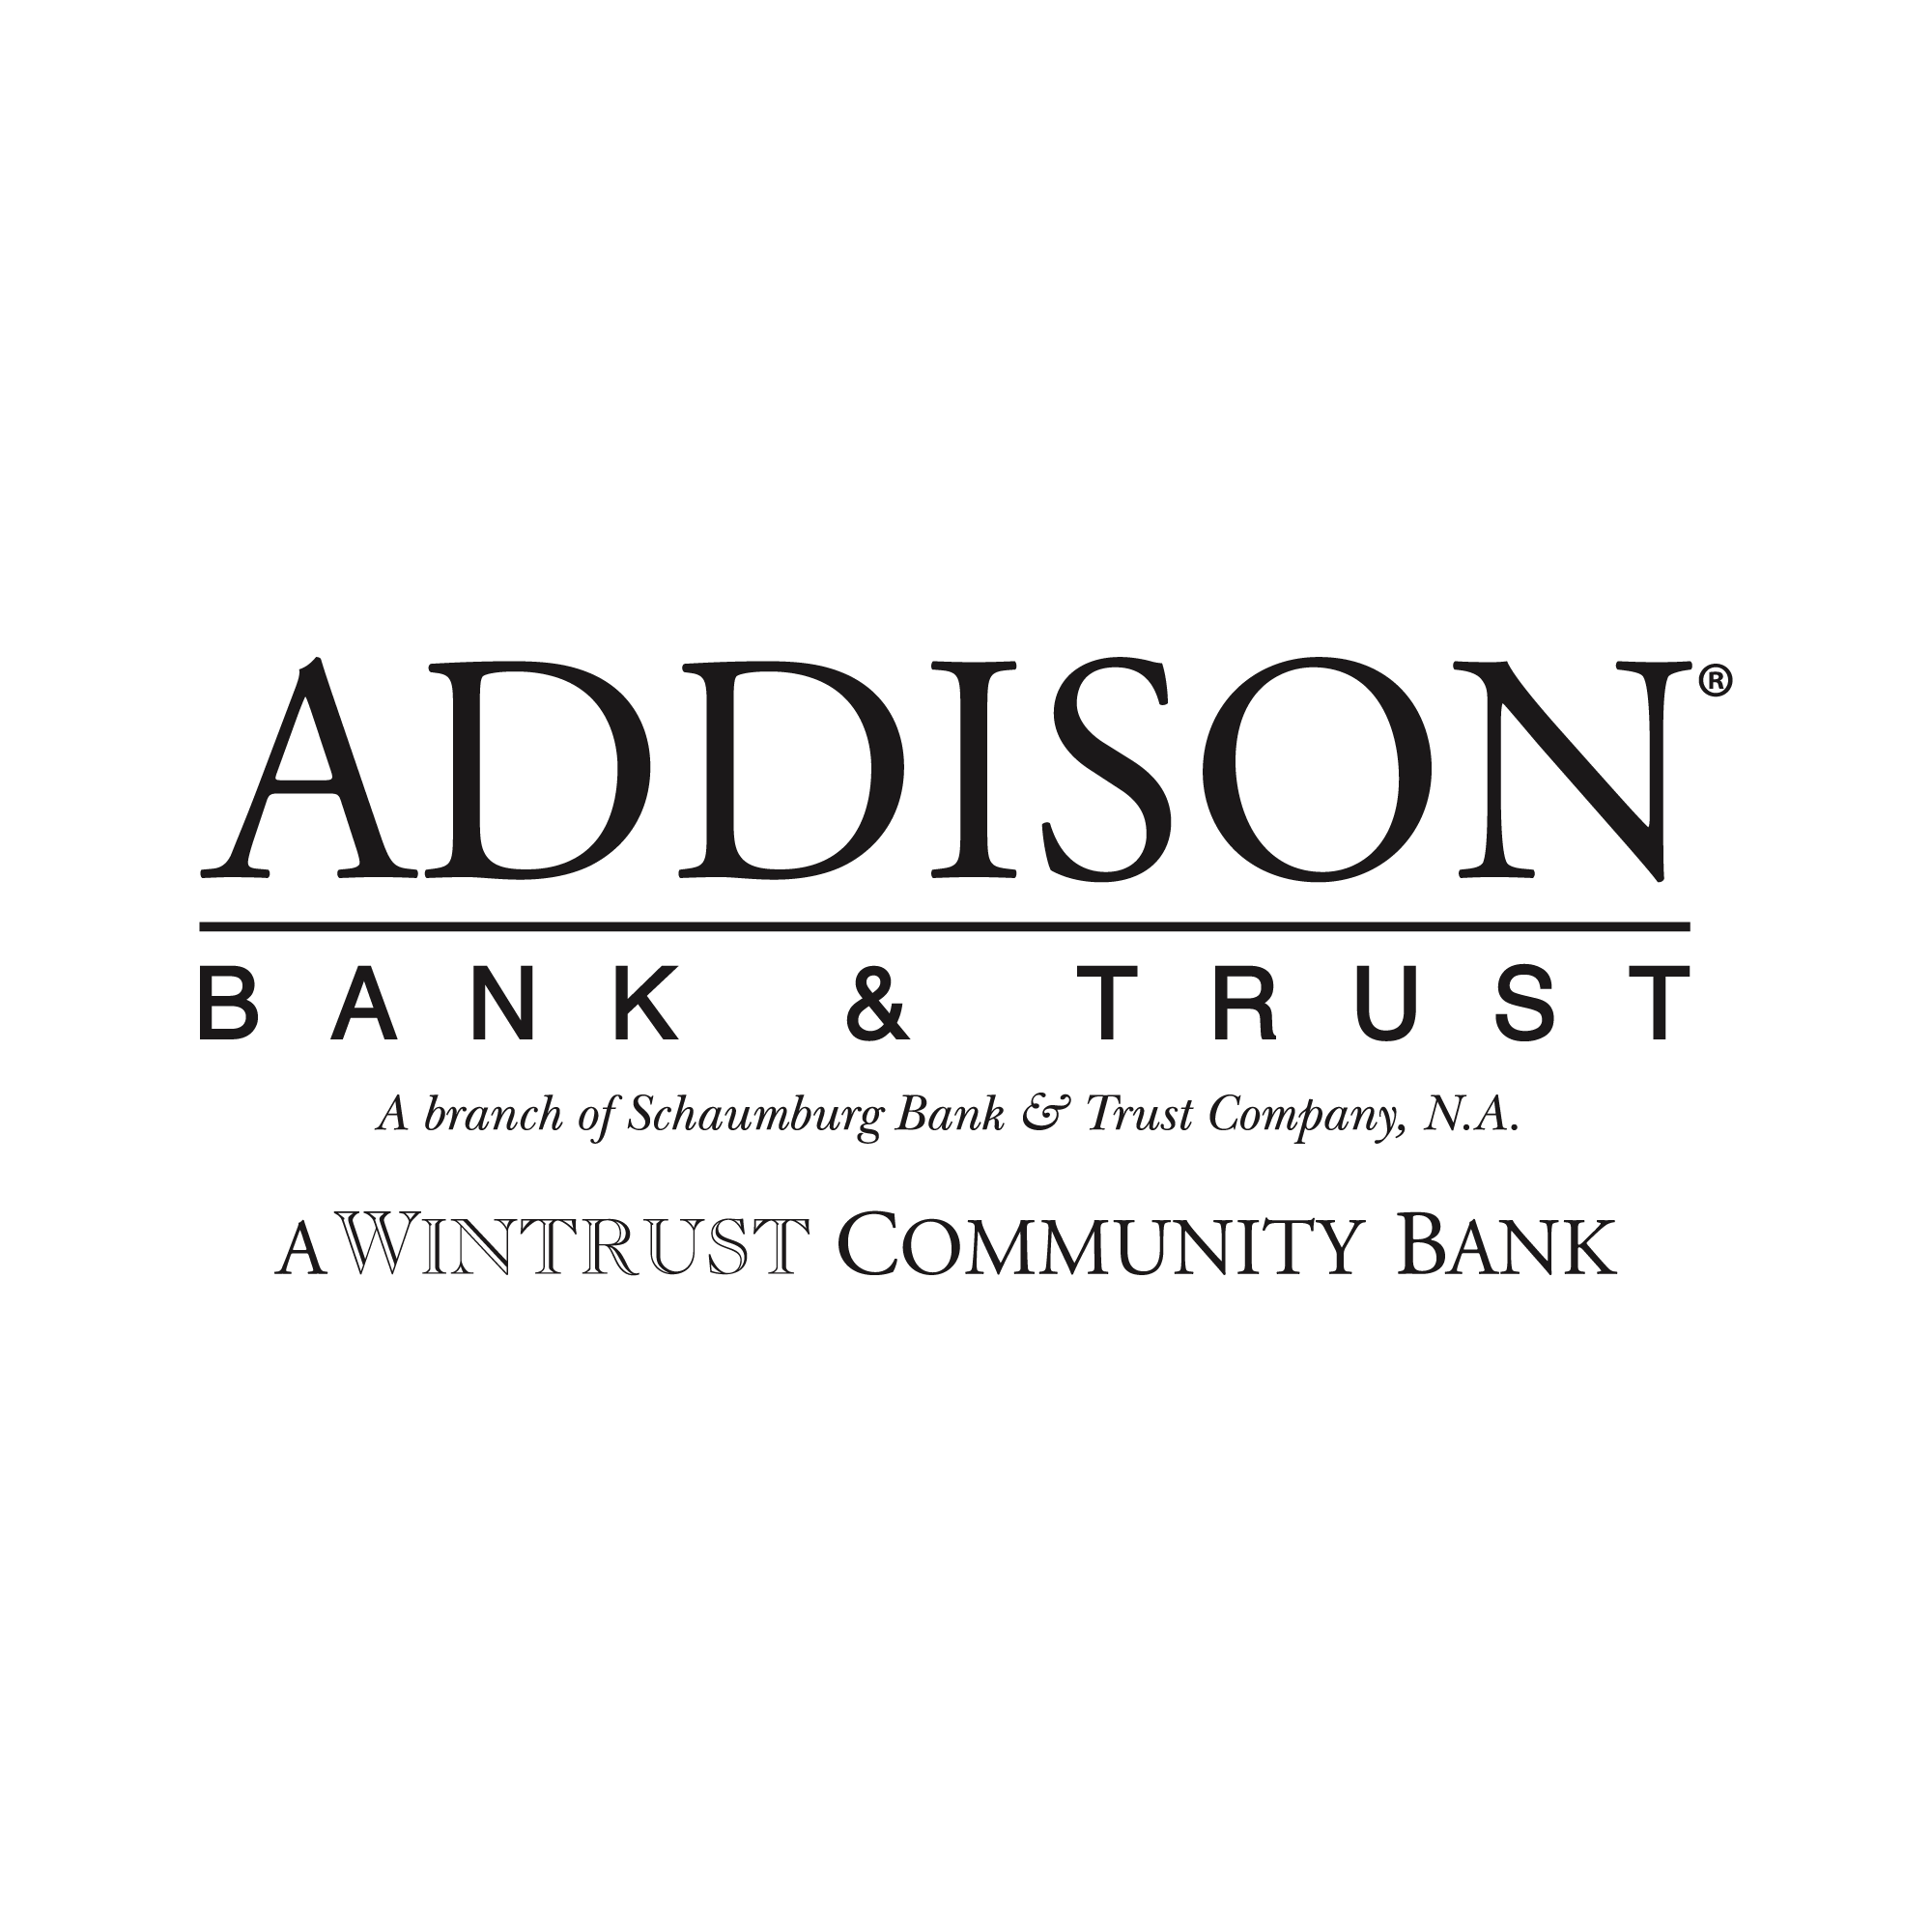 Addison Bank & Trust